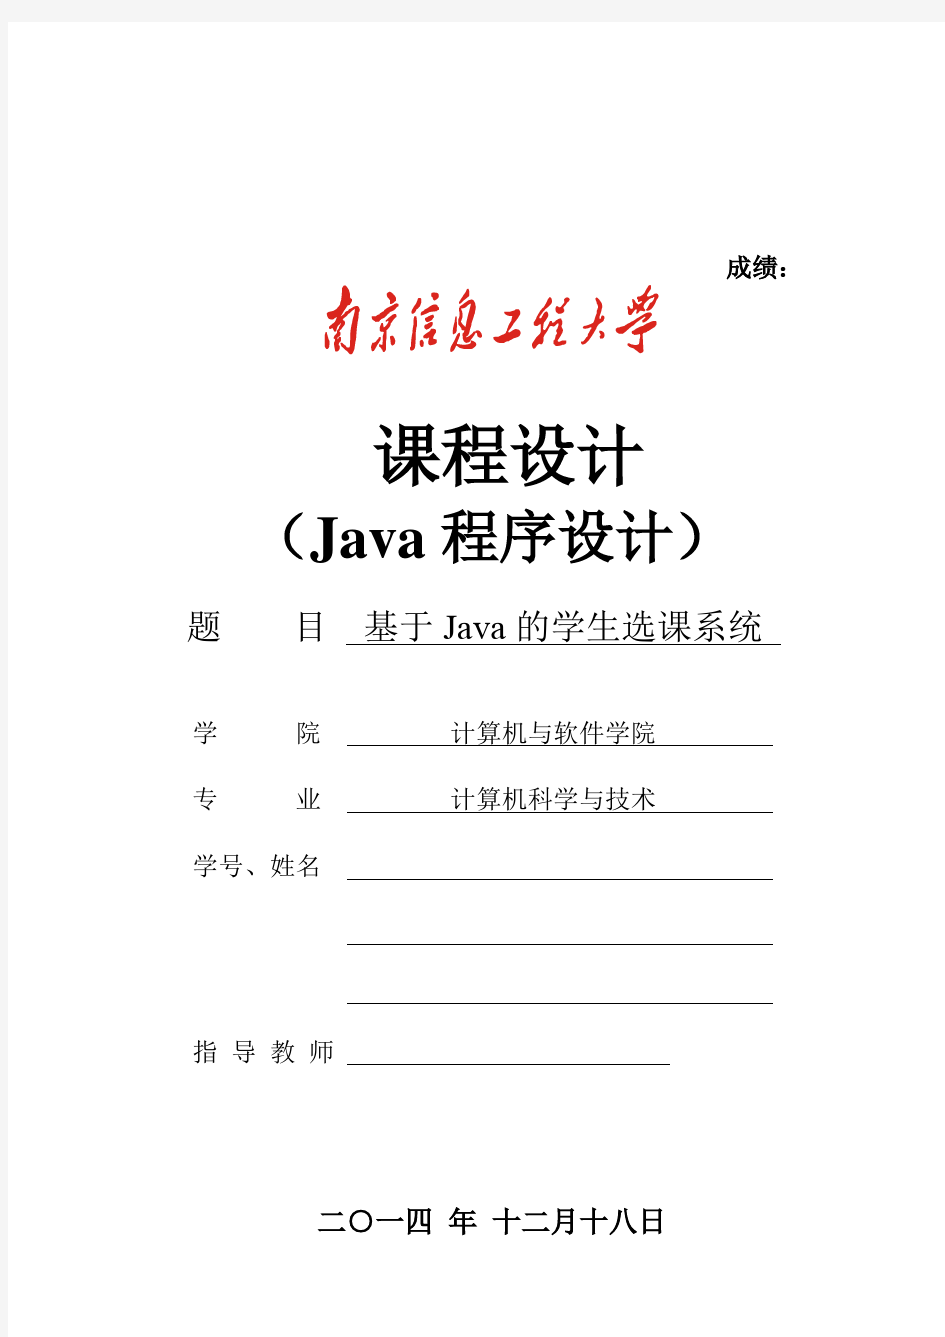 Java学生选课系统